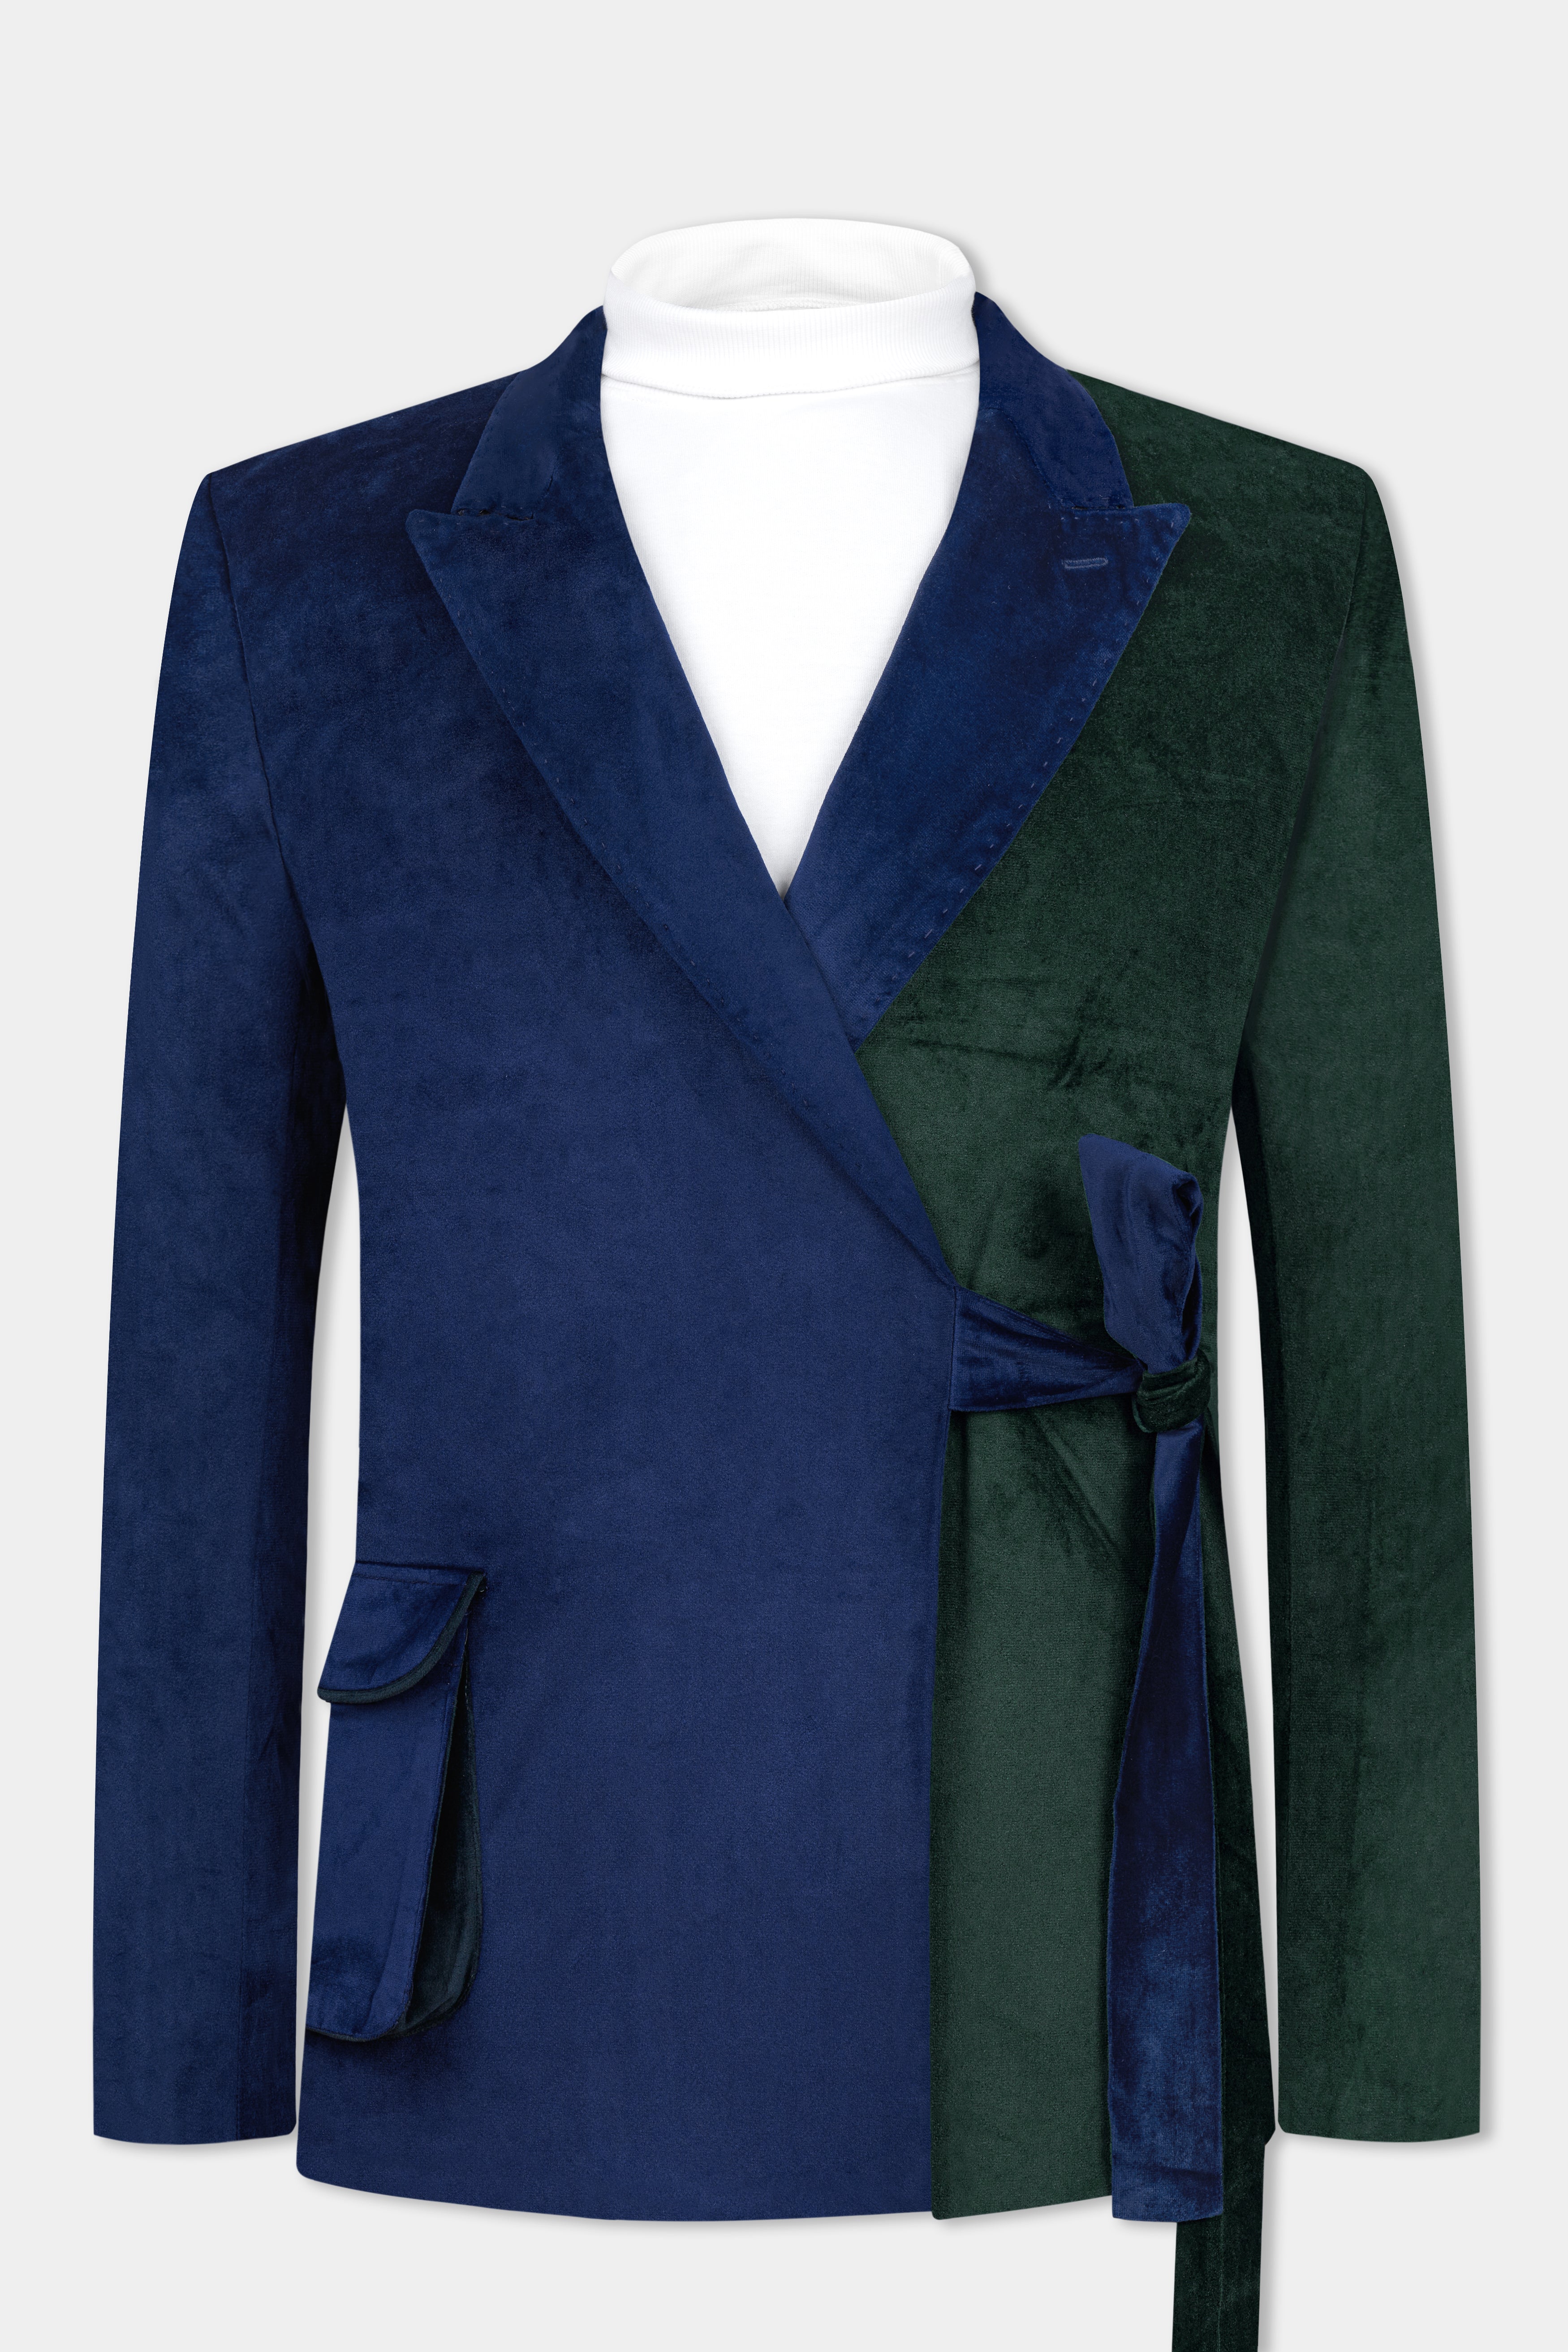 Downriver Blue and Green Velvet Designer Blazer with Belt Closure